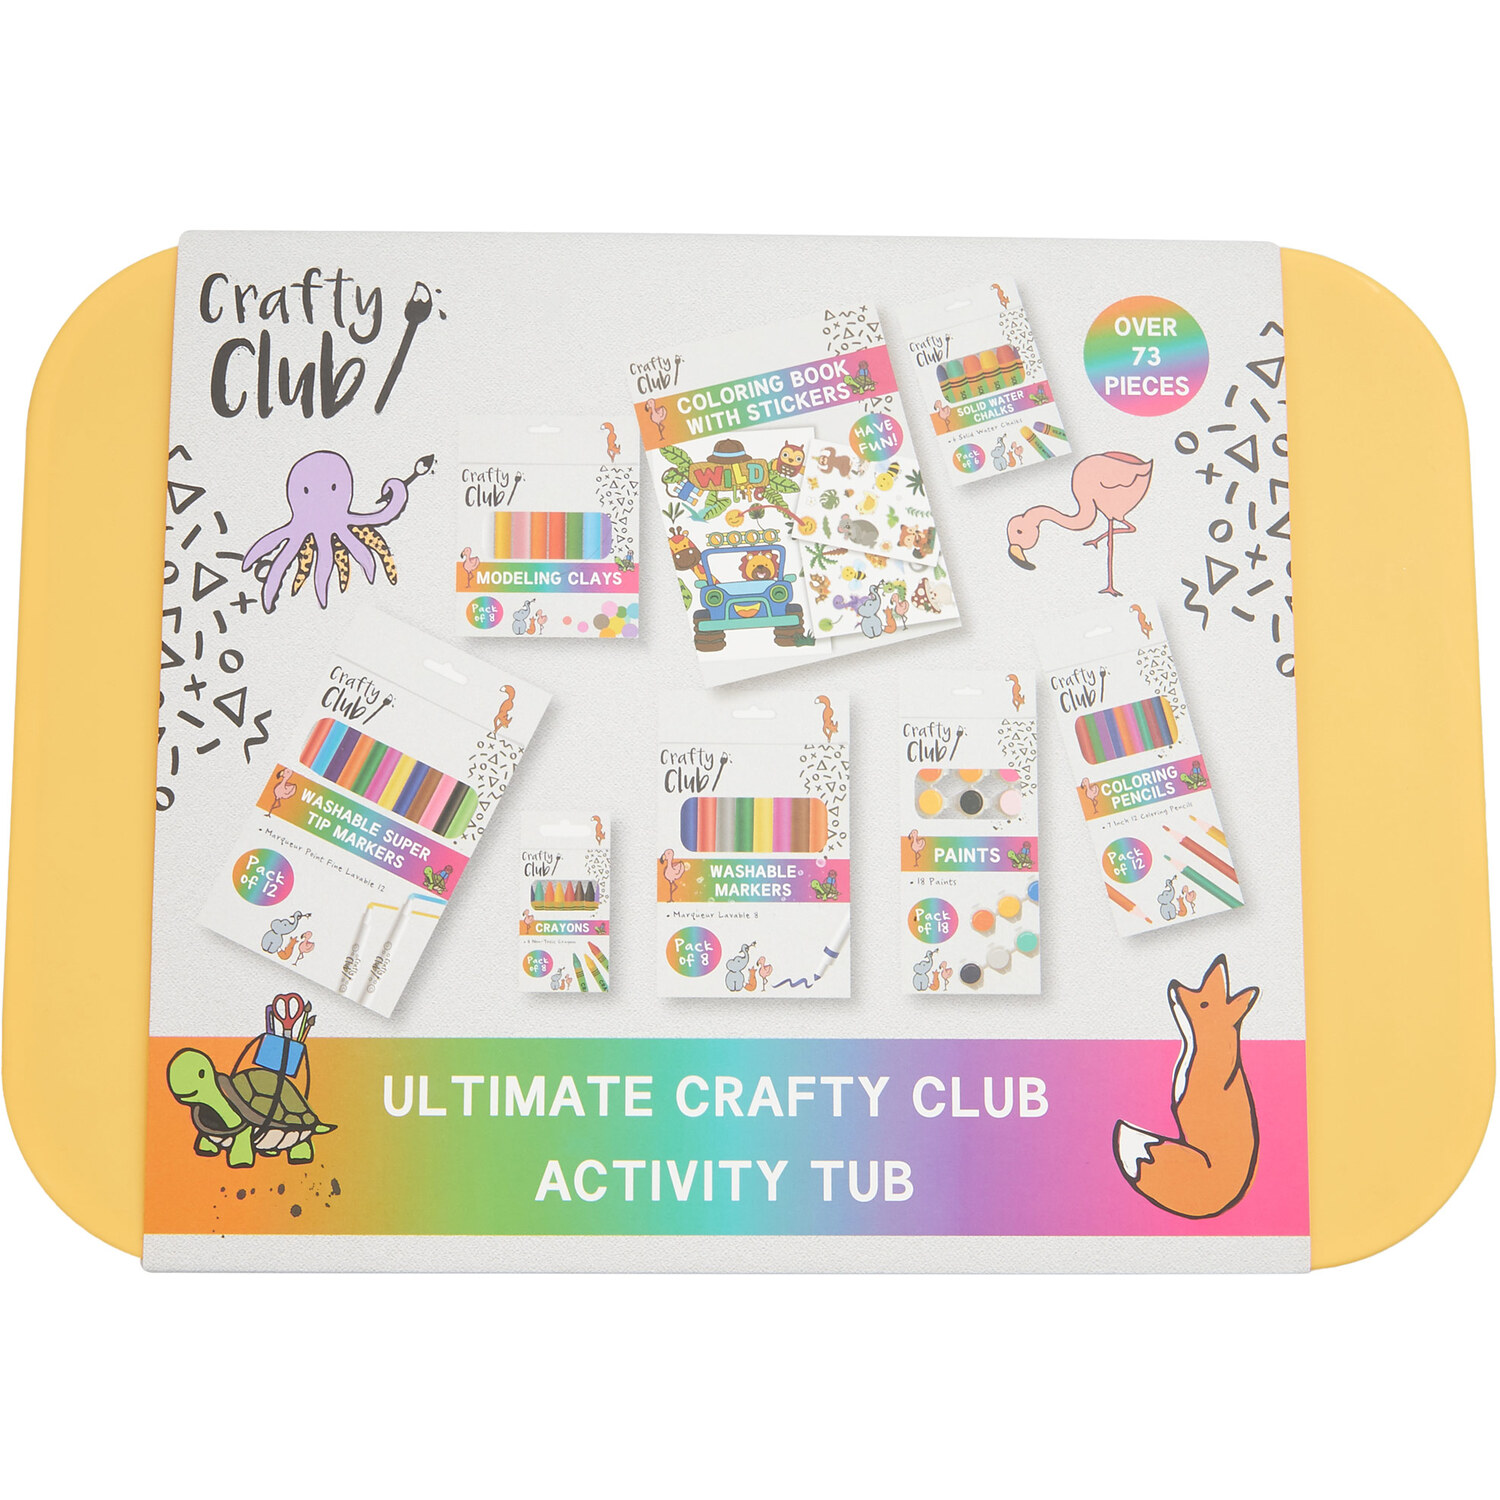 Ultimate Crafty Club Activity Tub Image 1